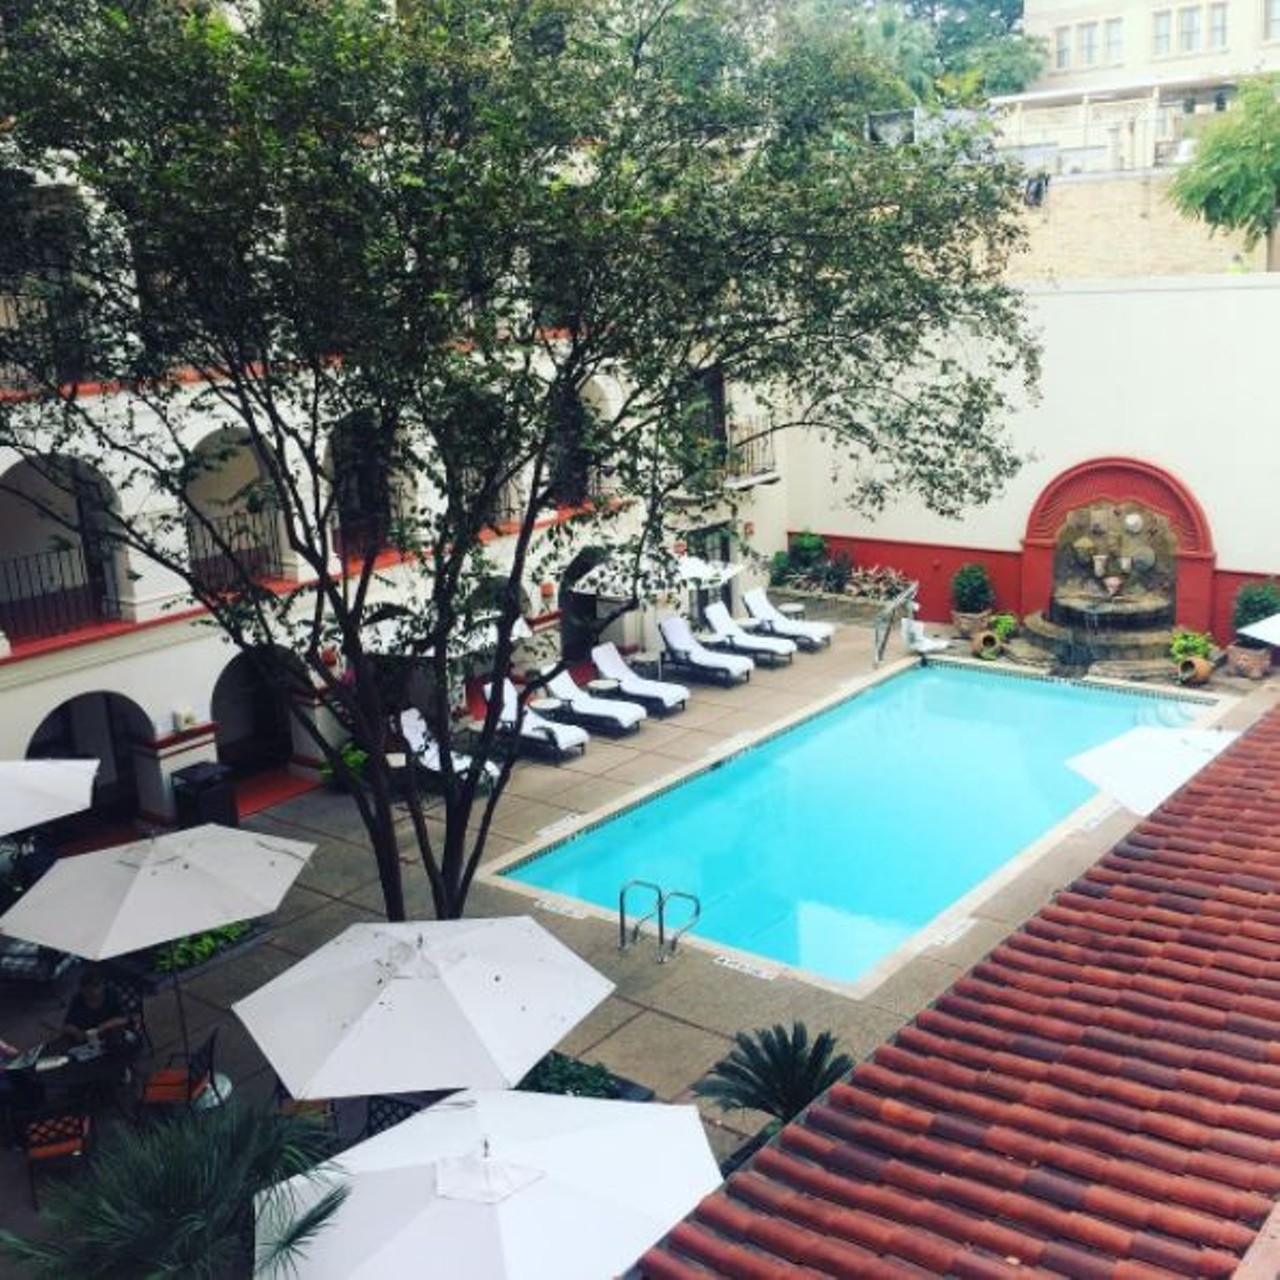 Omni La Mansi&oacute;n del Rio
112 College St, (210) 518-1000,  omnihotels.com/hotels/san-antonio-la-mansion-del-rio
This Riverwalk gem has a courtyard pool that you totally shouldn't sneak into this summer.
Photo via Instagram, ajwoodle